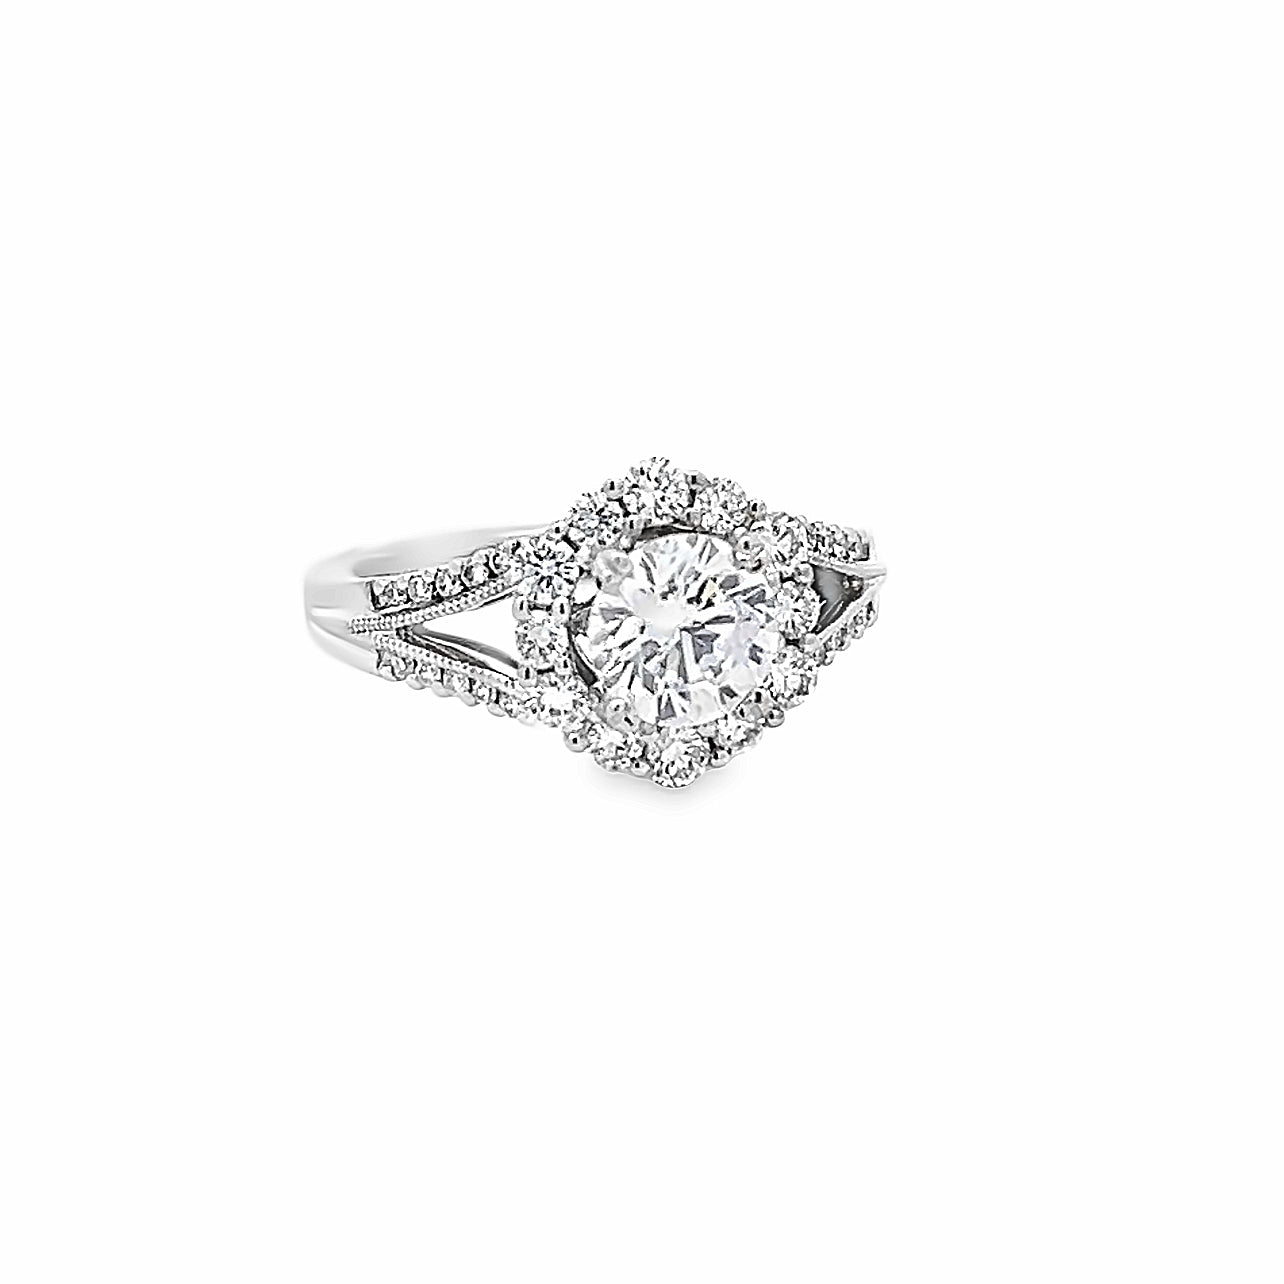 14k White Gold Round Diamond Halo Engagement Ring Setting (0.60ctw.)